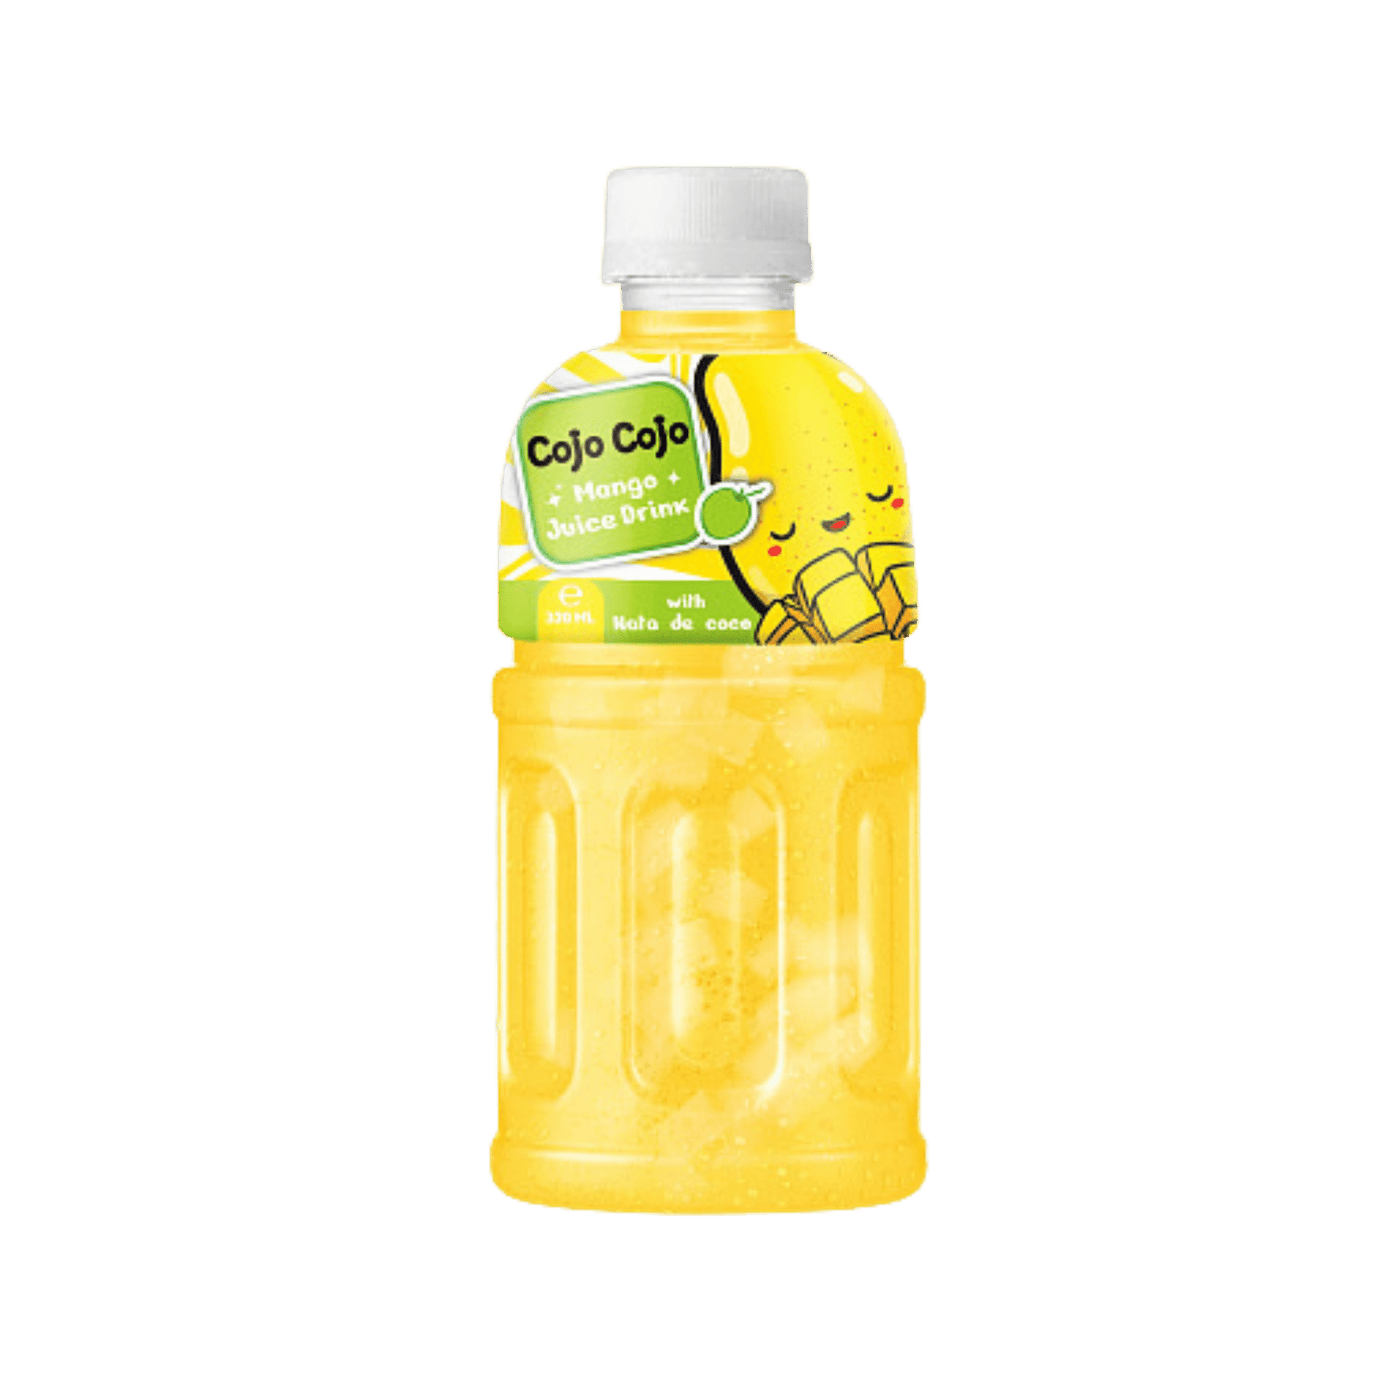 Cojo Cojo - Juice drink - Thaïlande